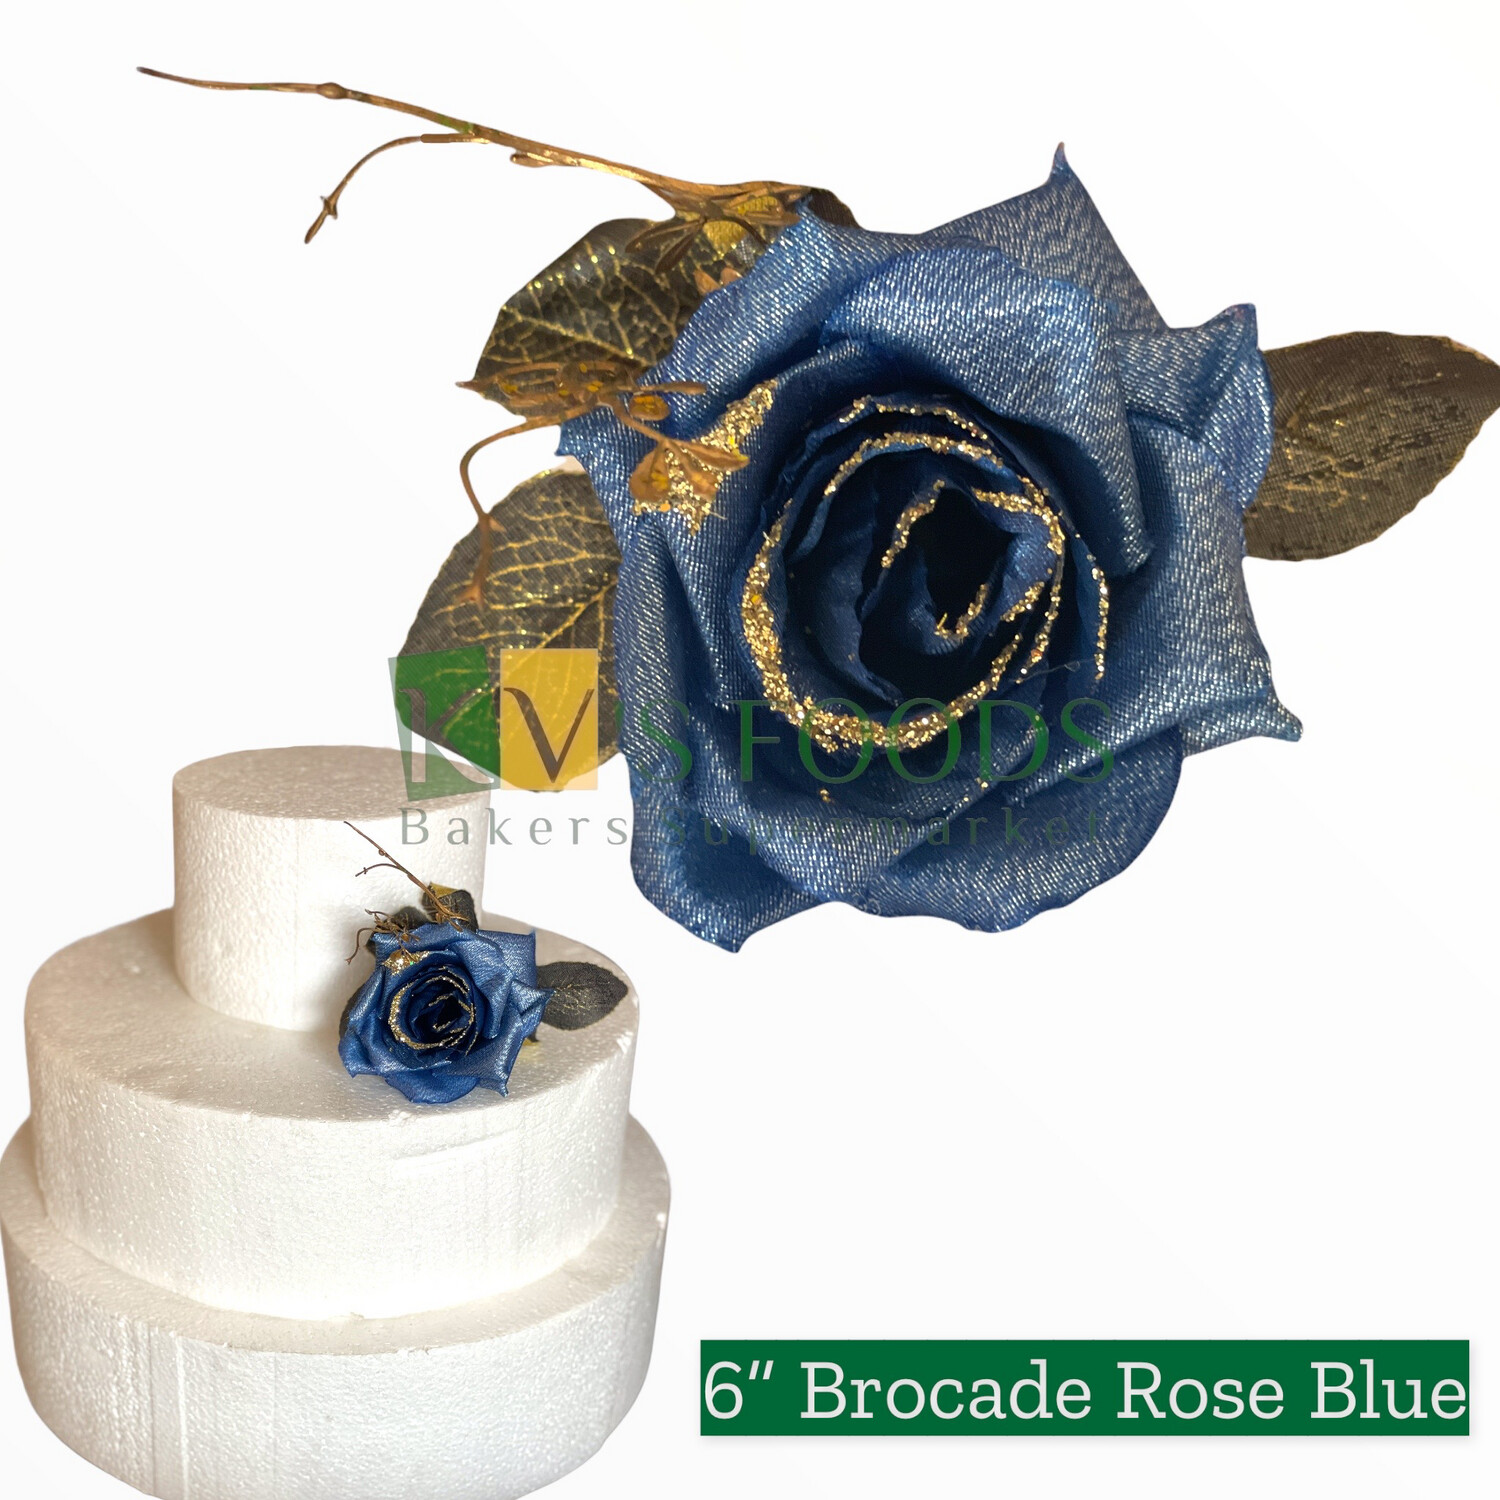 6” Non-edible Artificial Brocade Rose Blue Flower RoseWood Color For Cake Decoration  | Wedding Cake Flower - KV’s FOODS